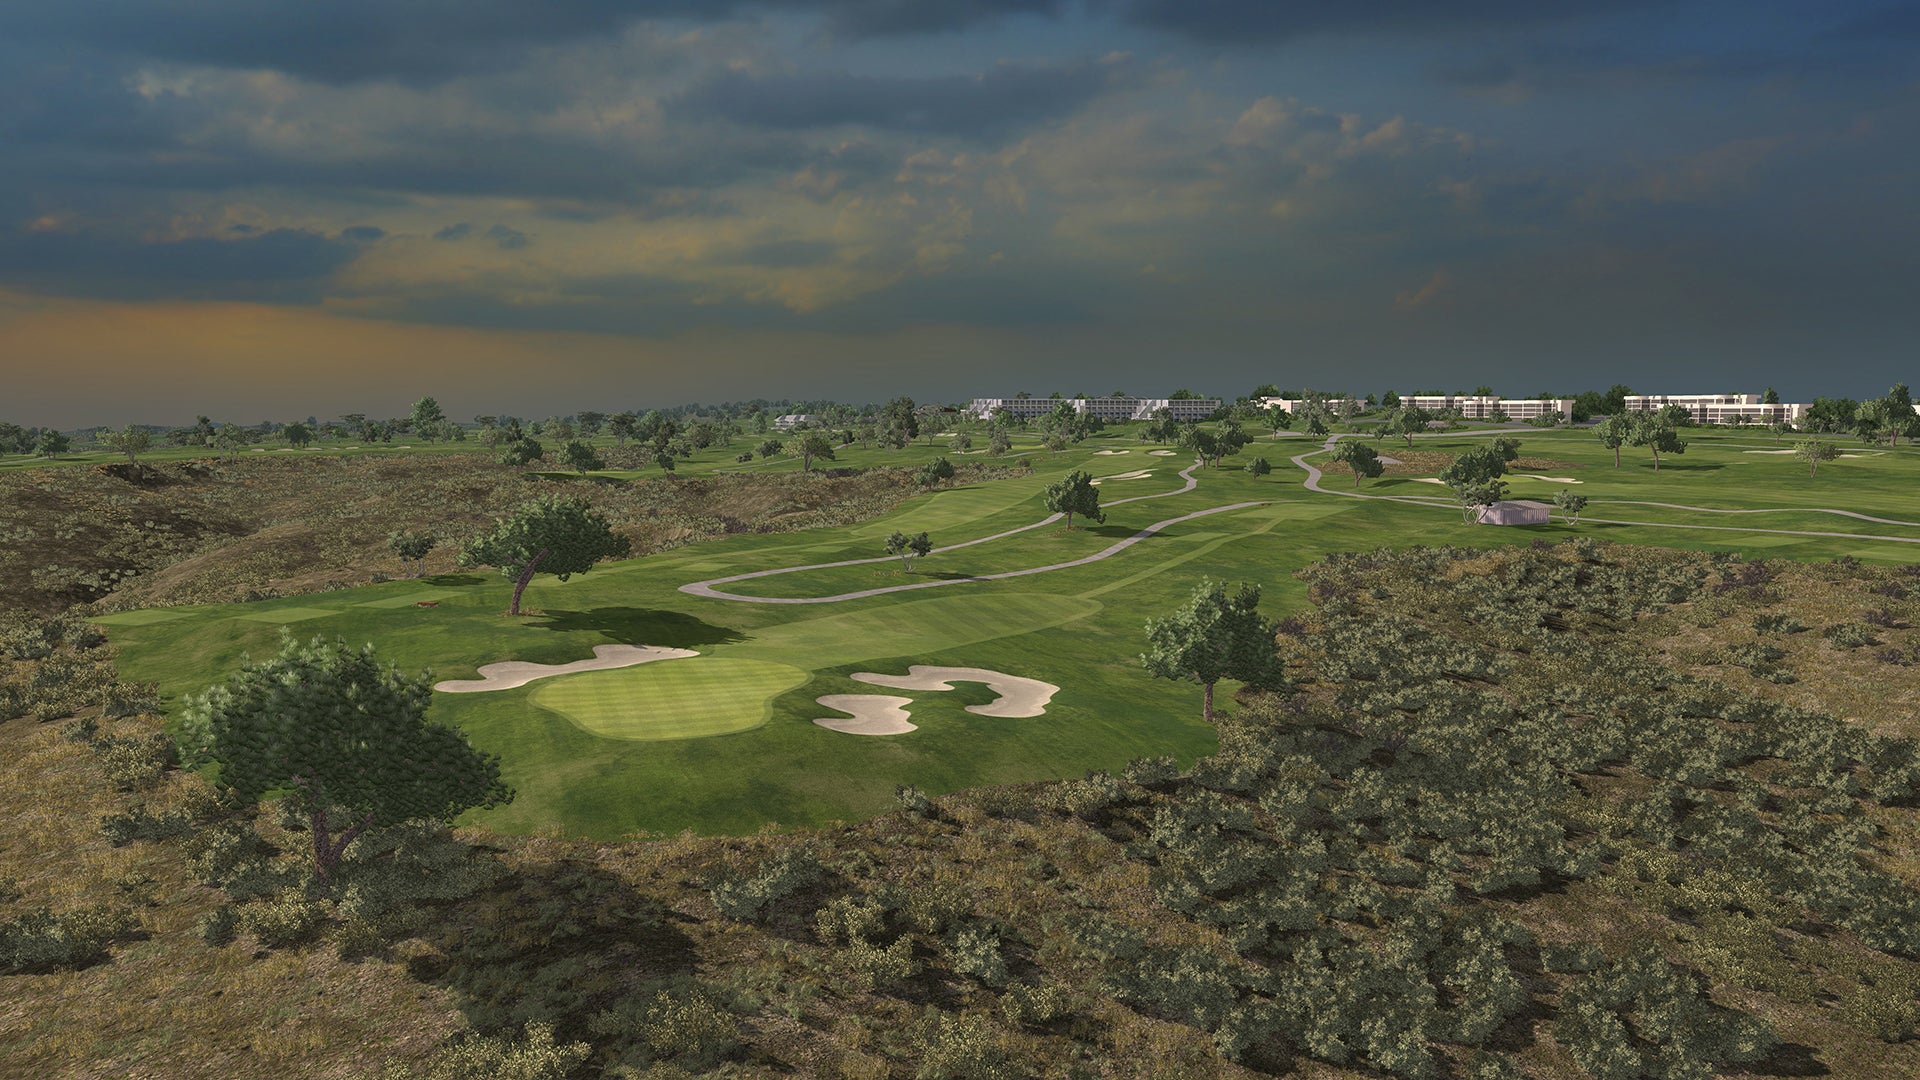 Torrey Pines golf course on SKYTRAK golf simulation software